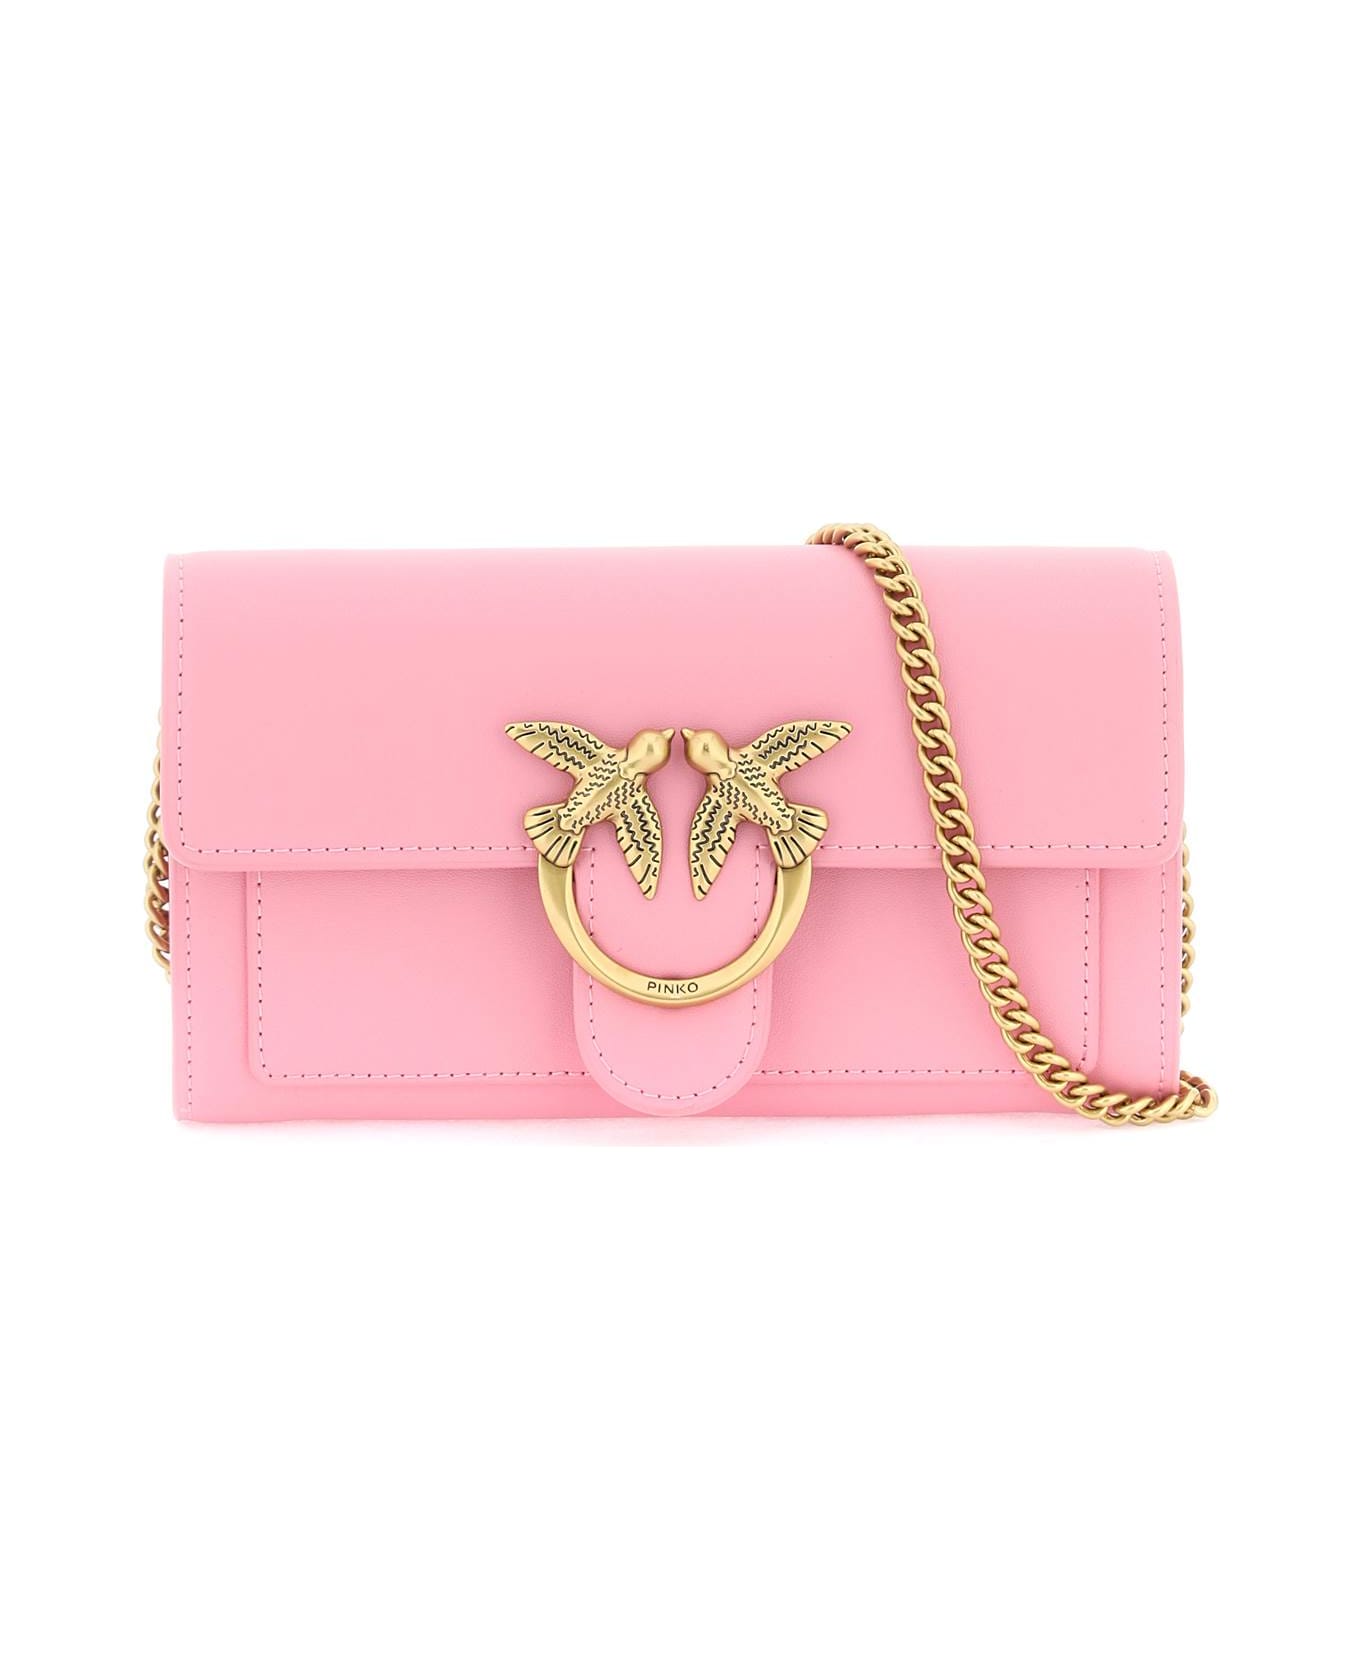 Pinko Love Bag Crossbody Bag - Pink 財布